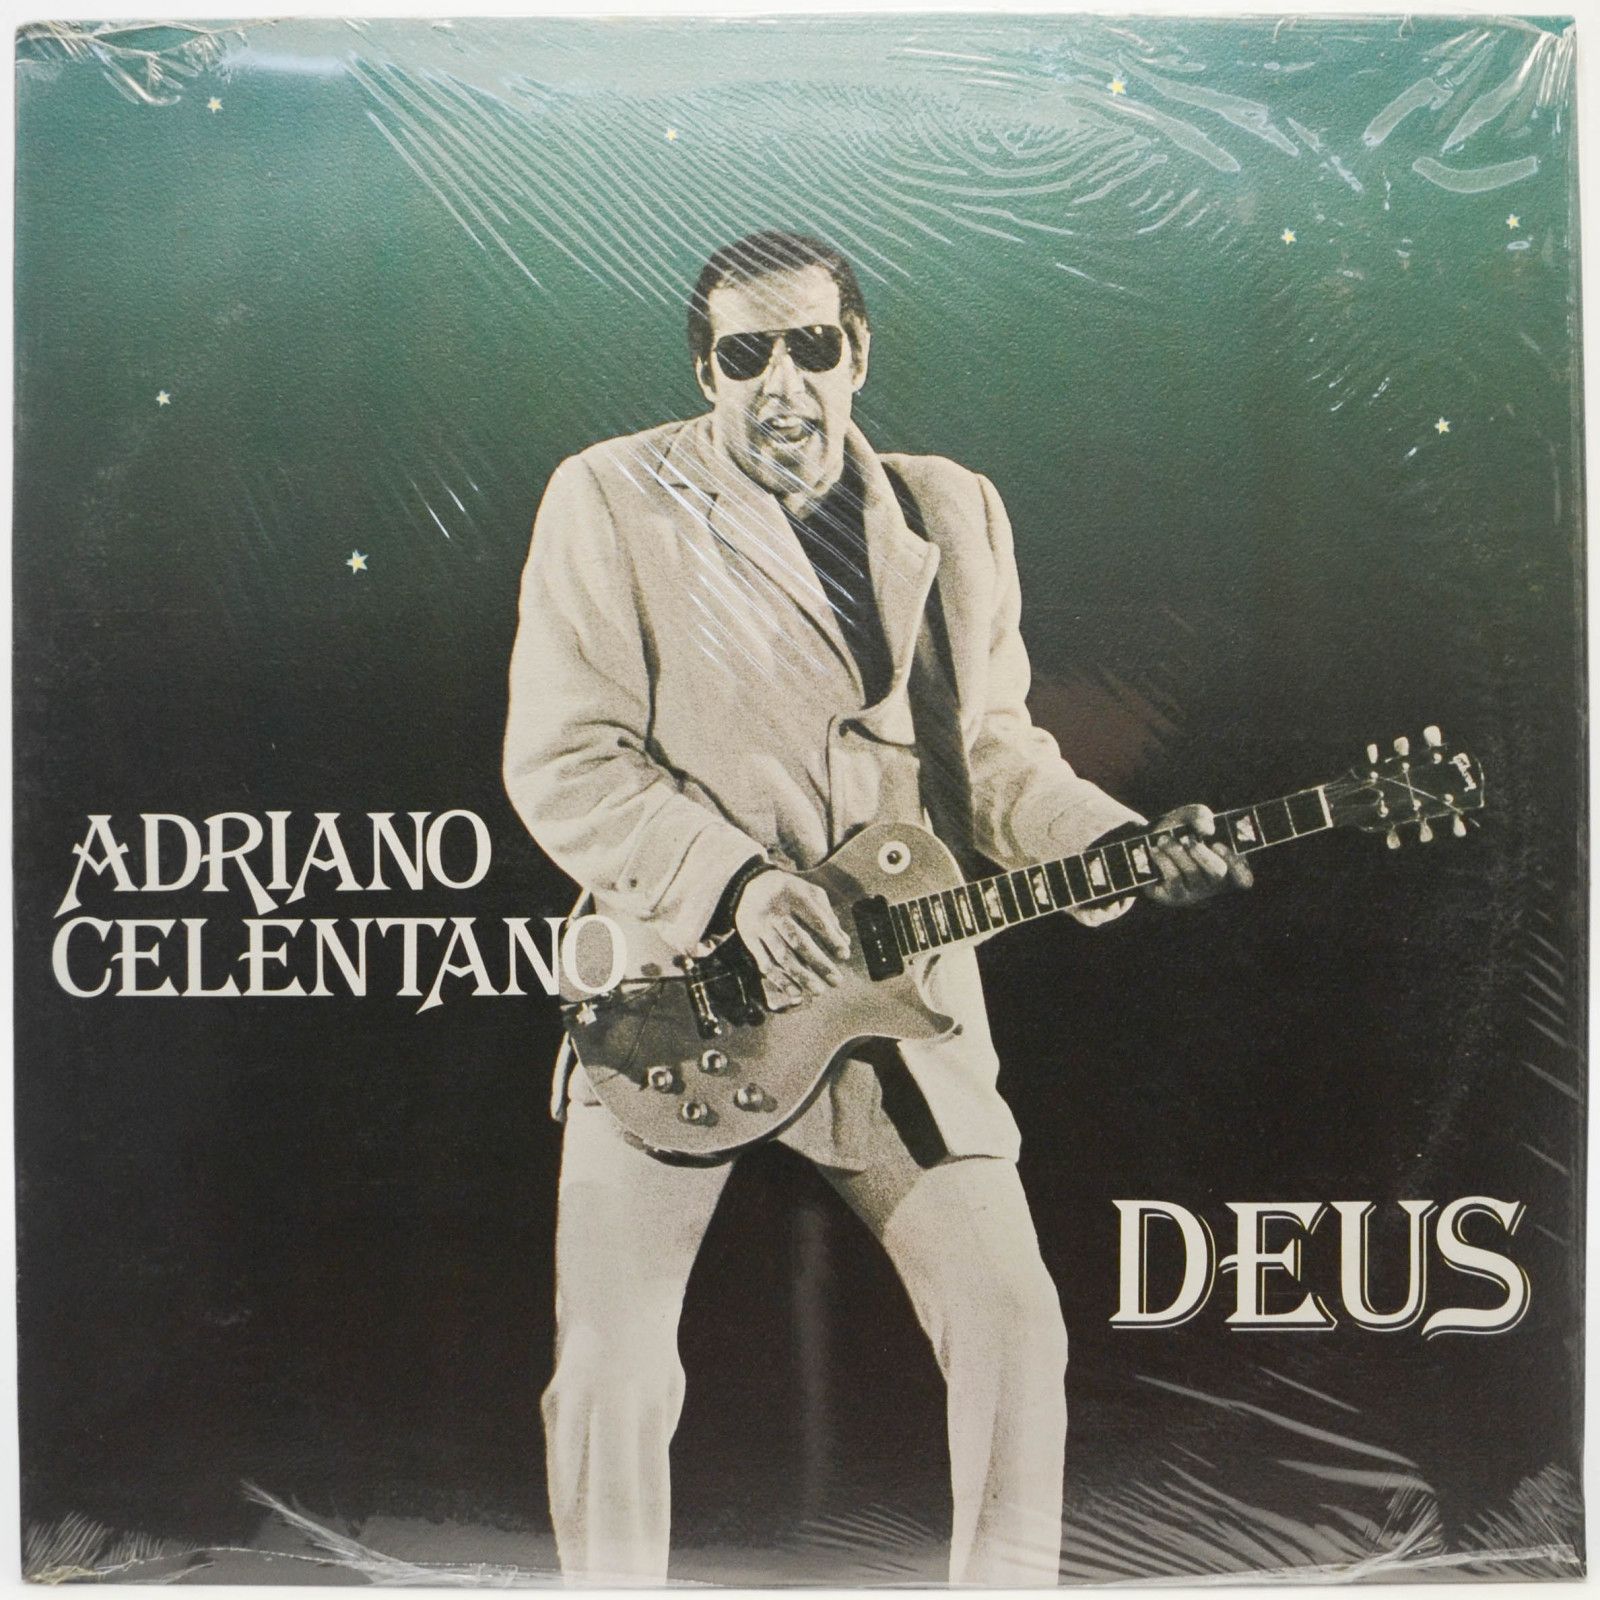 Adriano Celentano — Deus (1-st, Italy, Clan), 1981